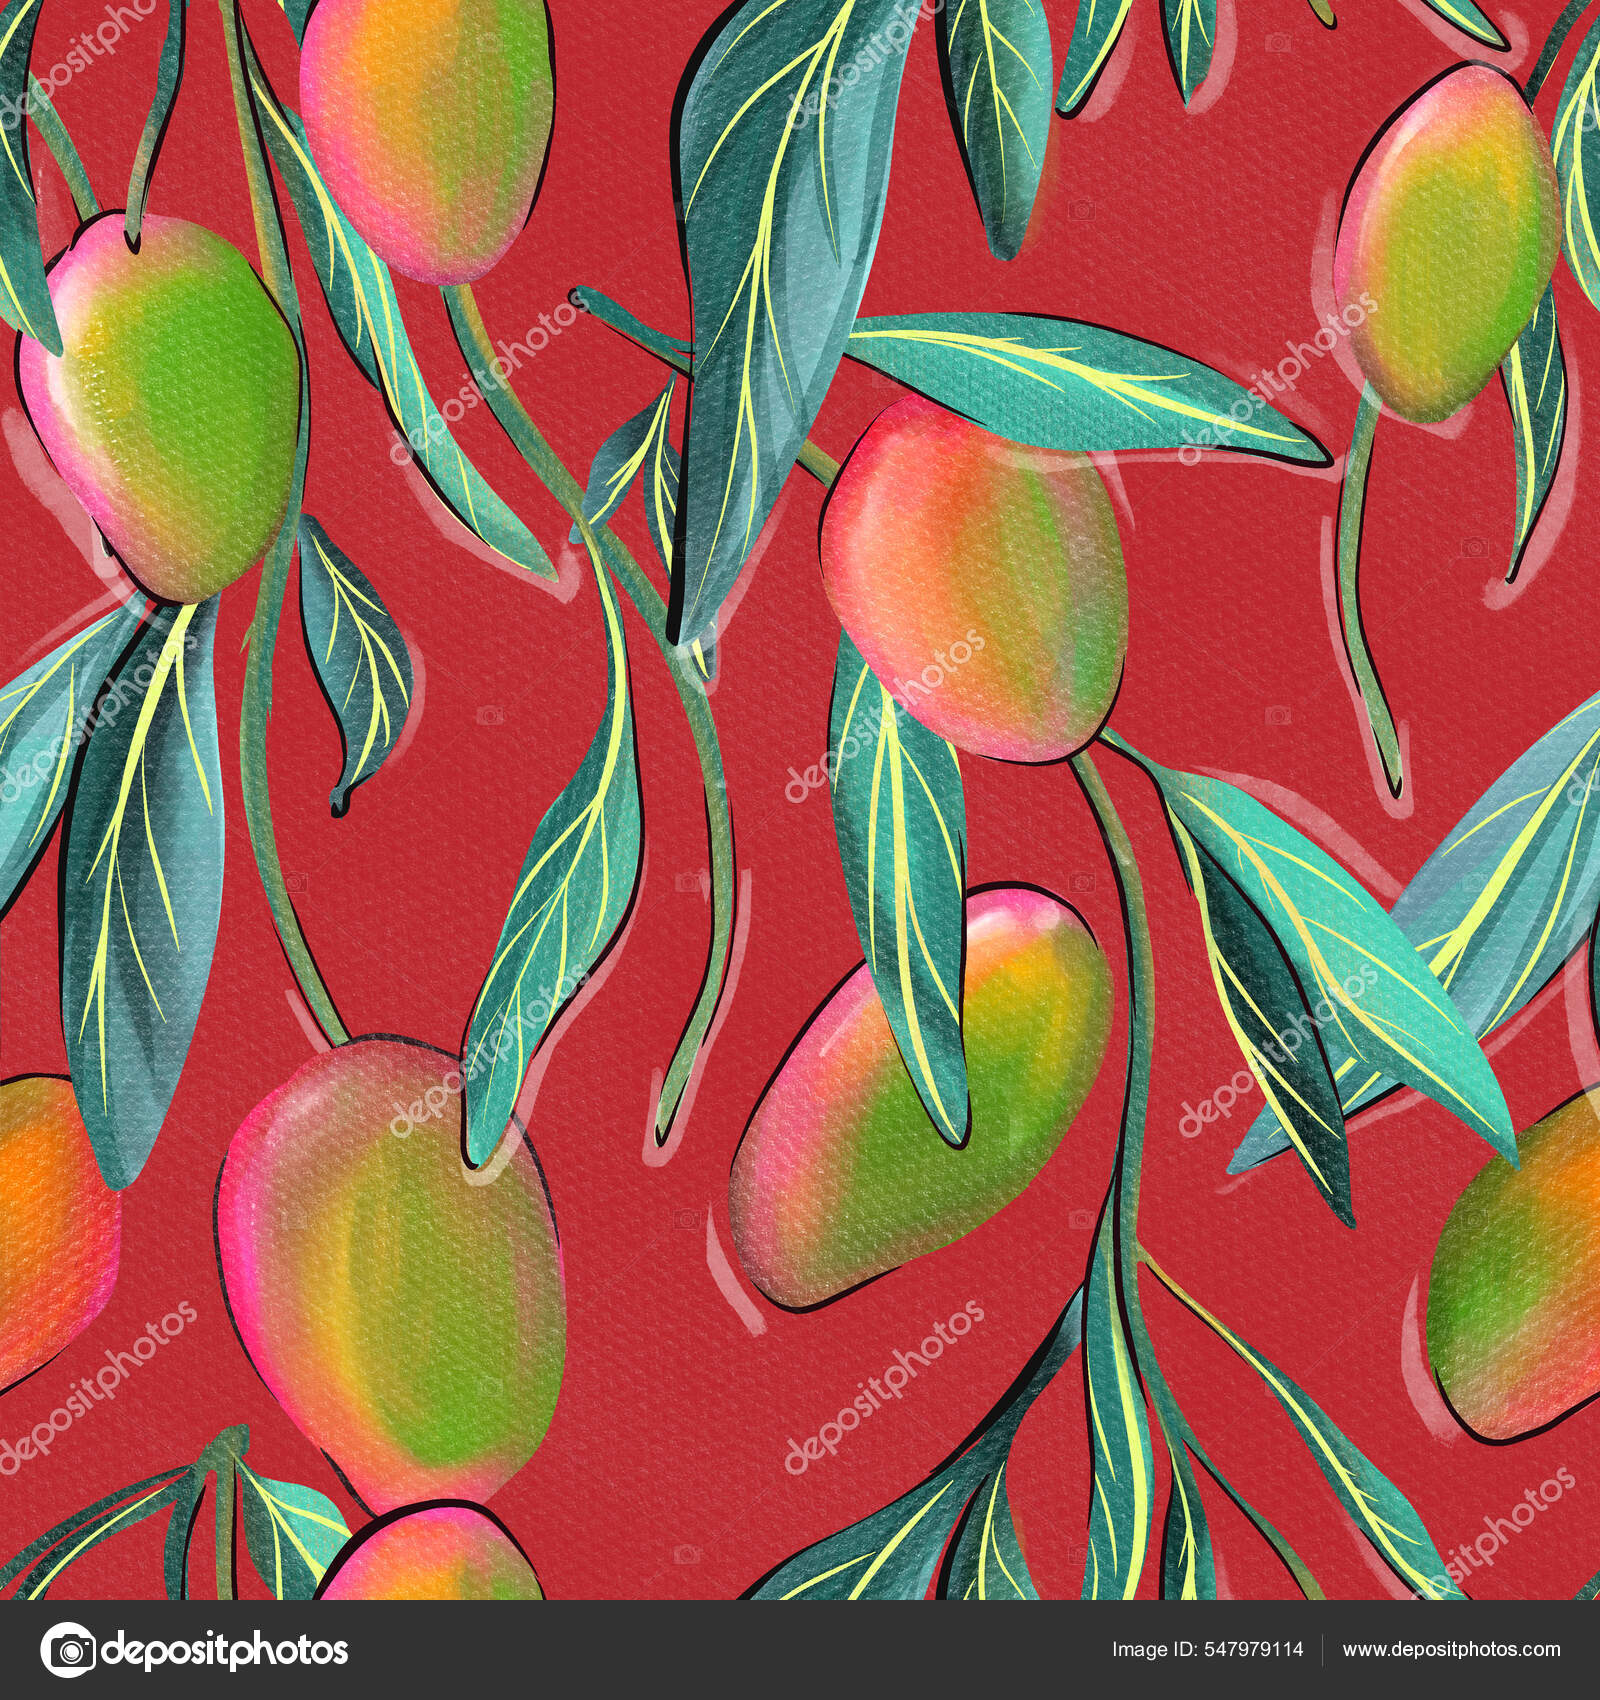 https://st.depositphotos.com/6544746/54797/i/1600/depositphotos_547979114-stock-illustration-mango-tree-bloom-seamless-pattern.jpg